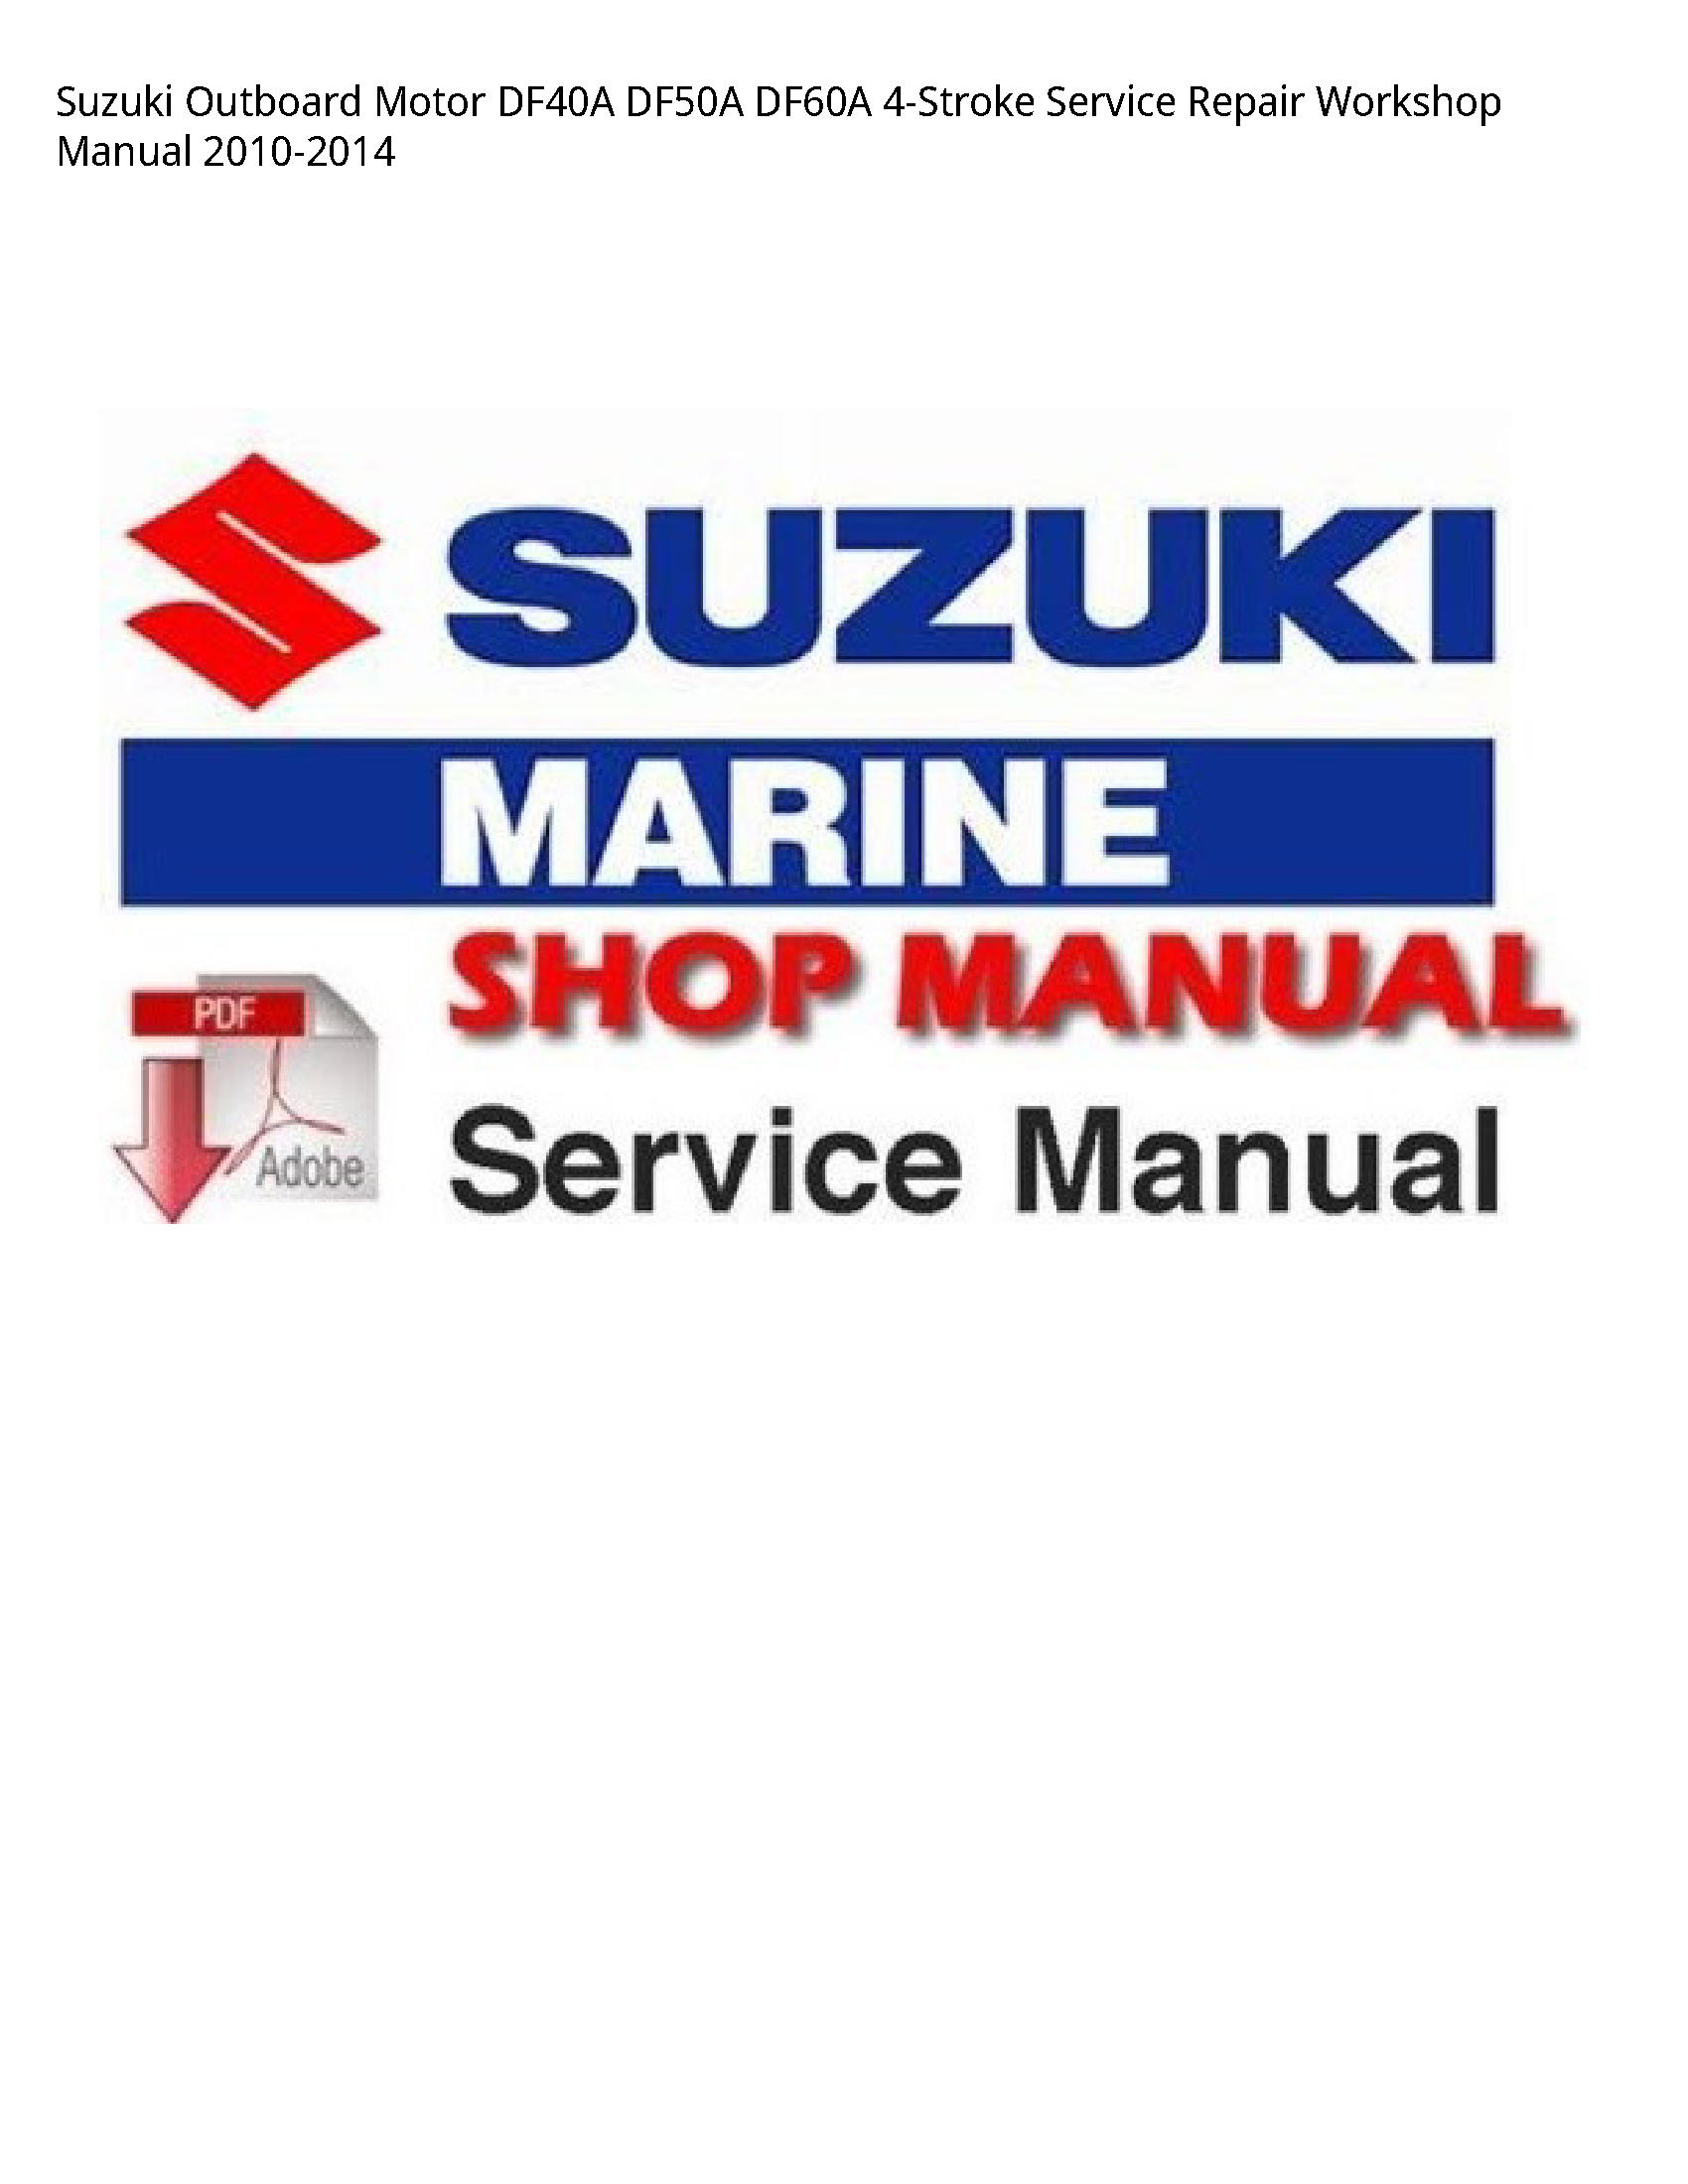 Suzuki DF40A Outboard Motor manual